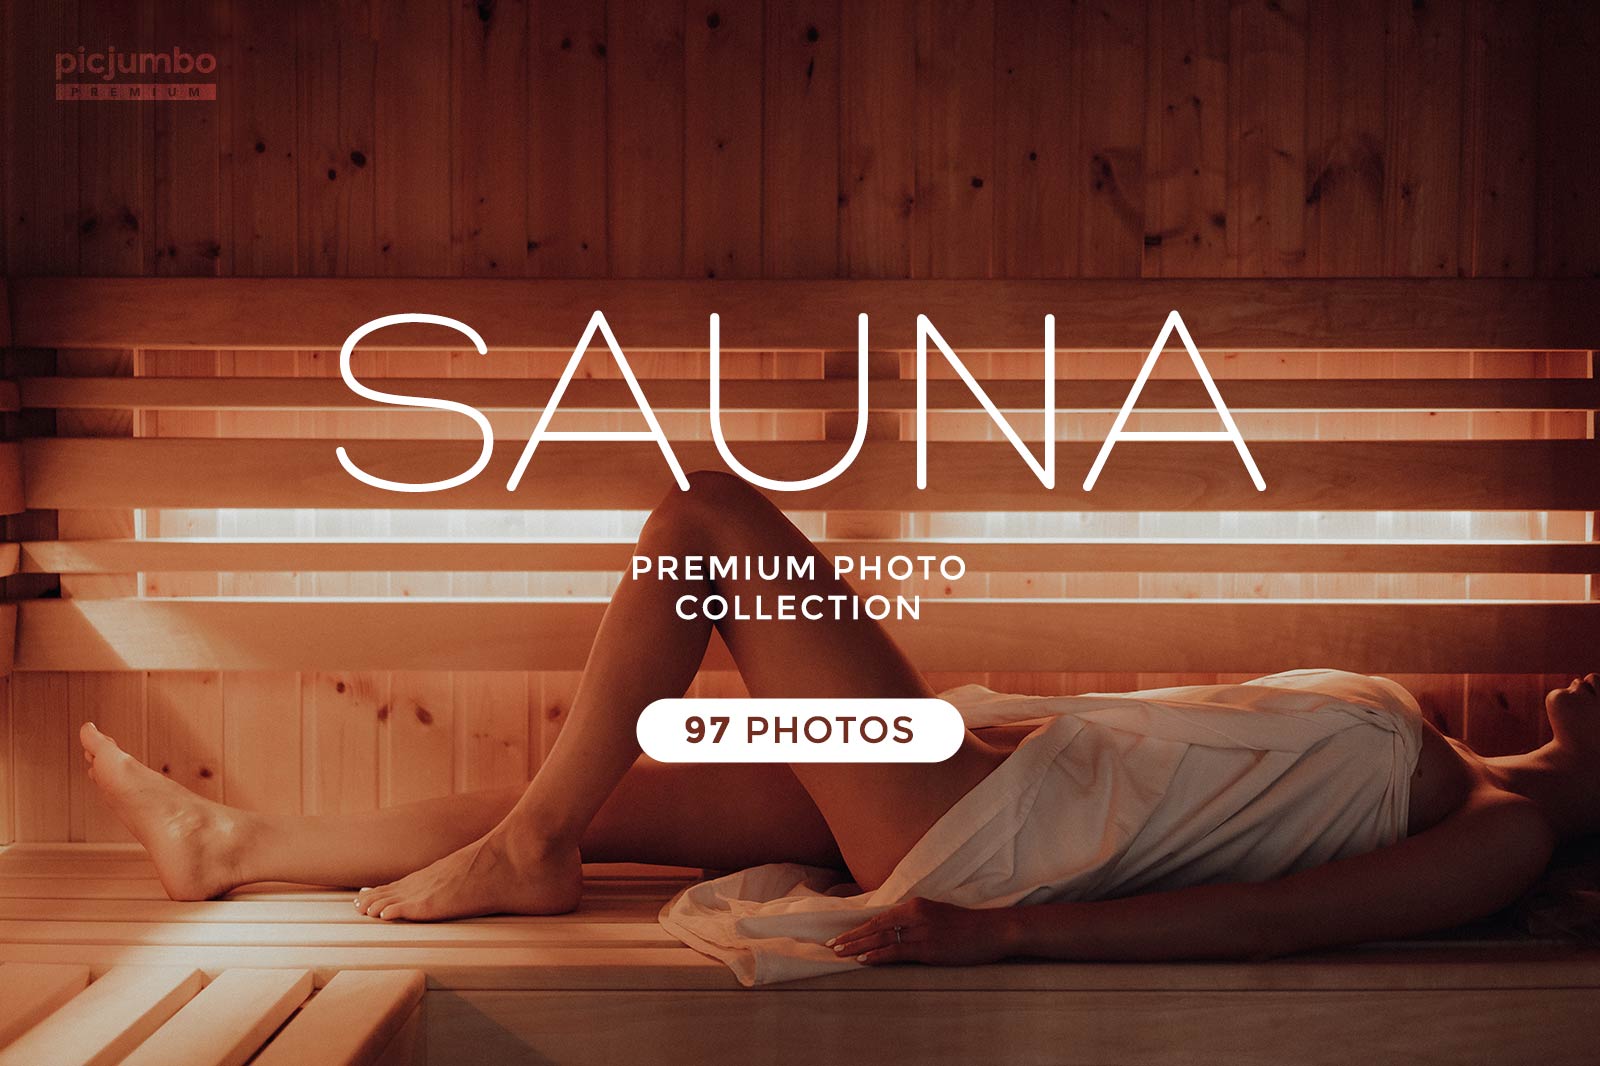 Sauna Stock Photo Collection